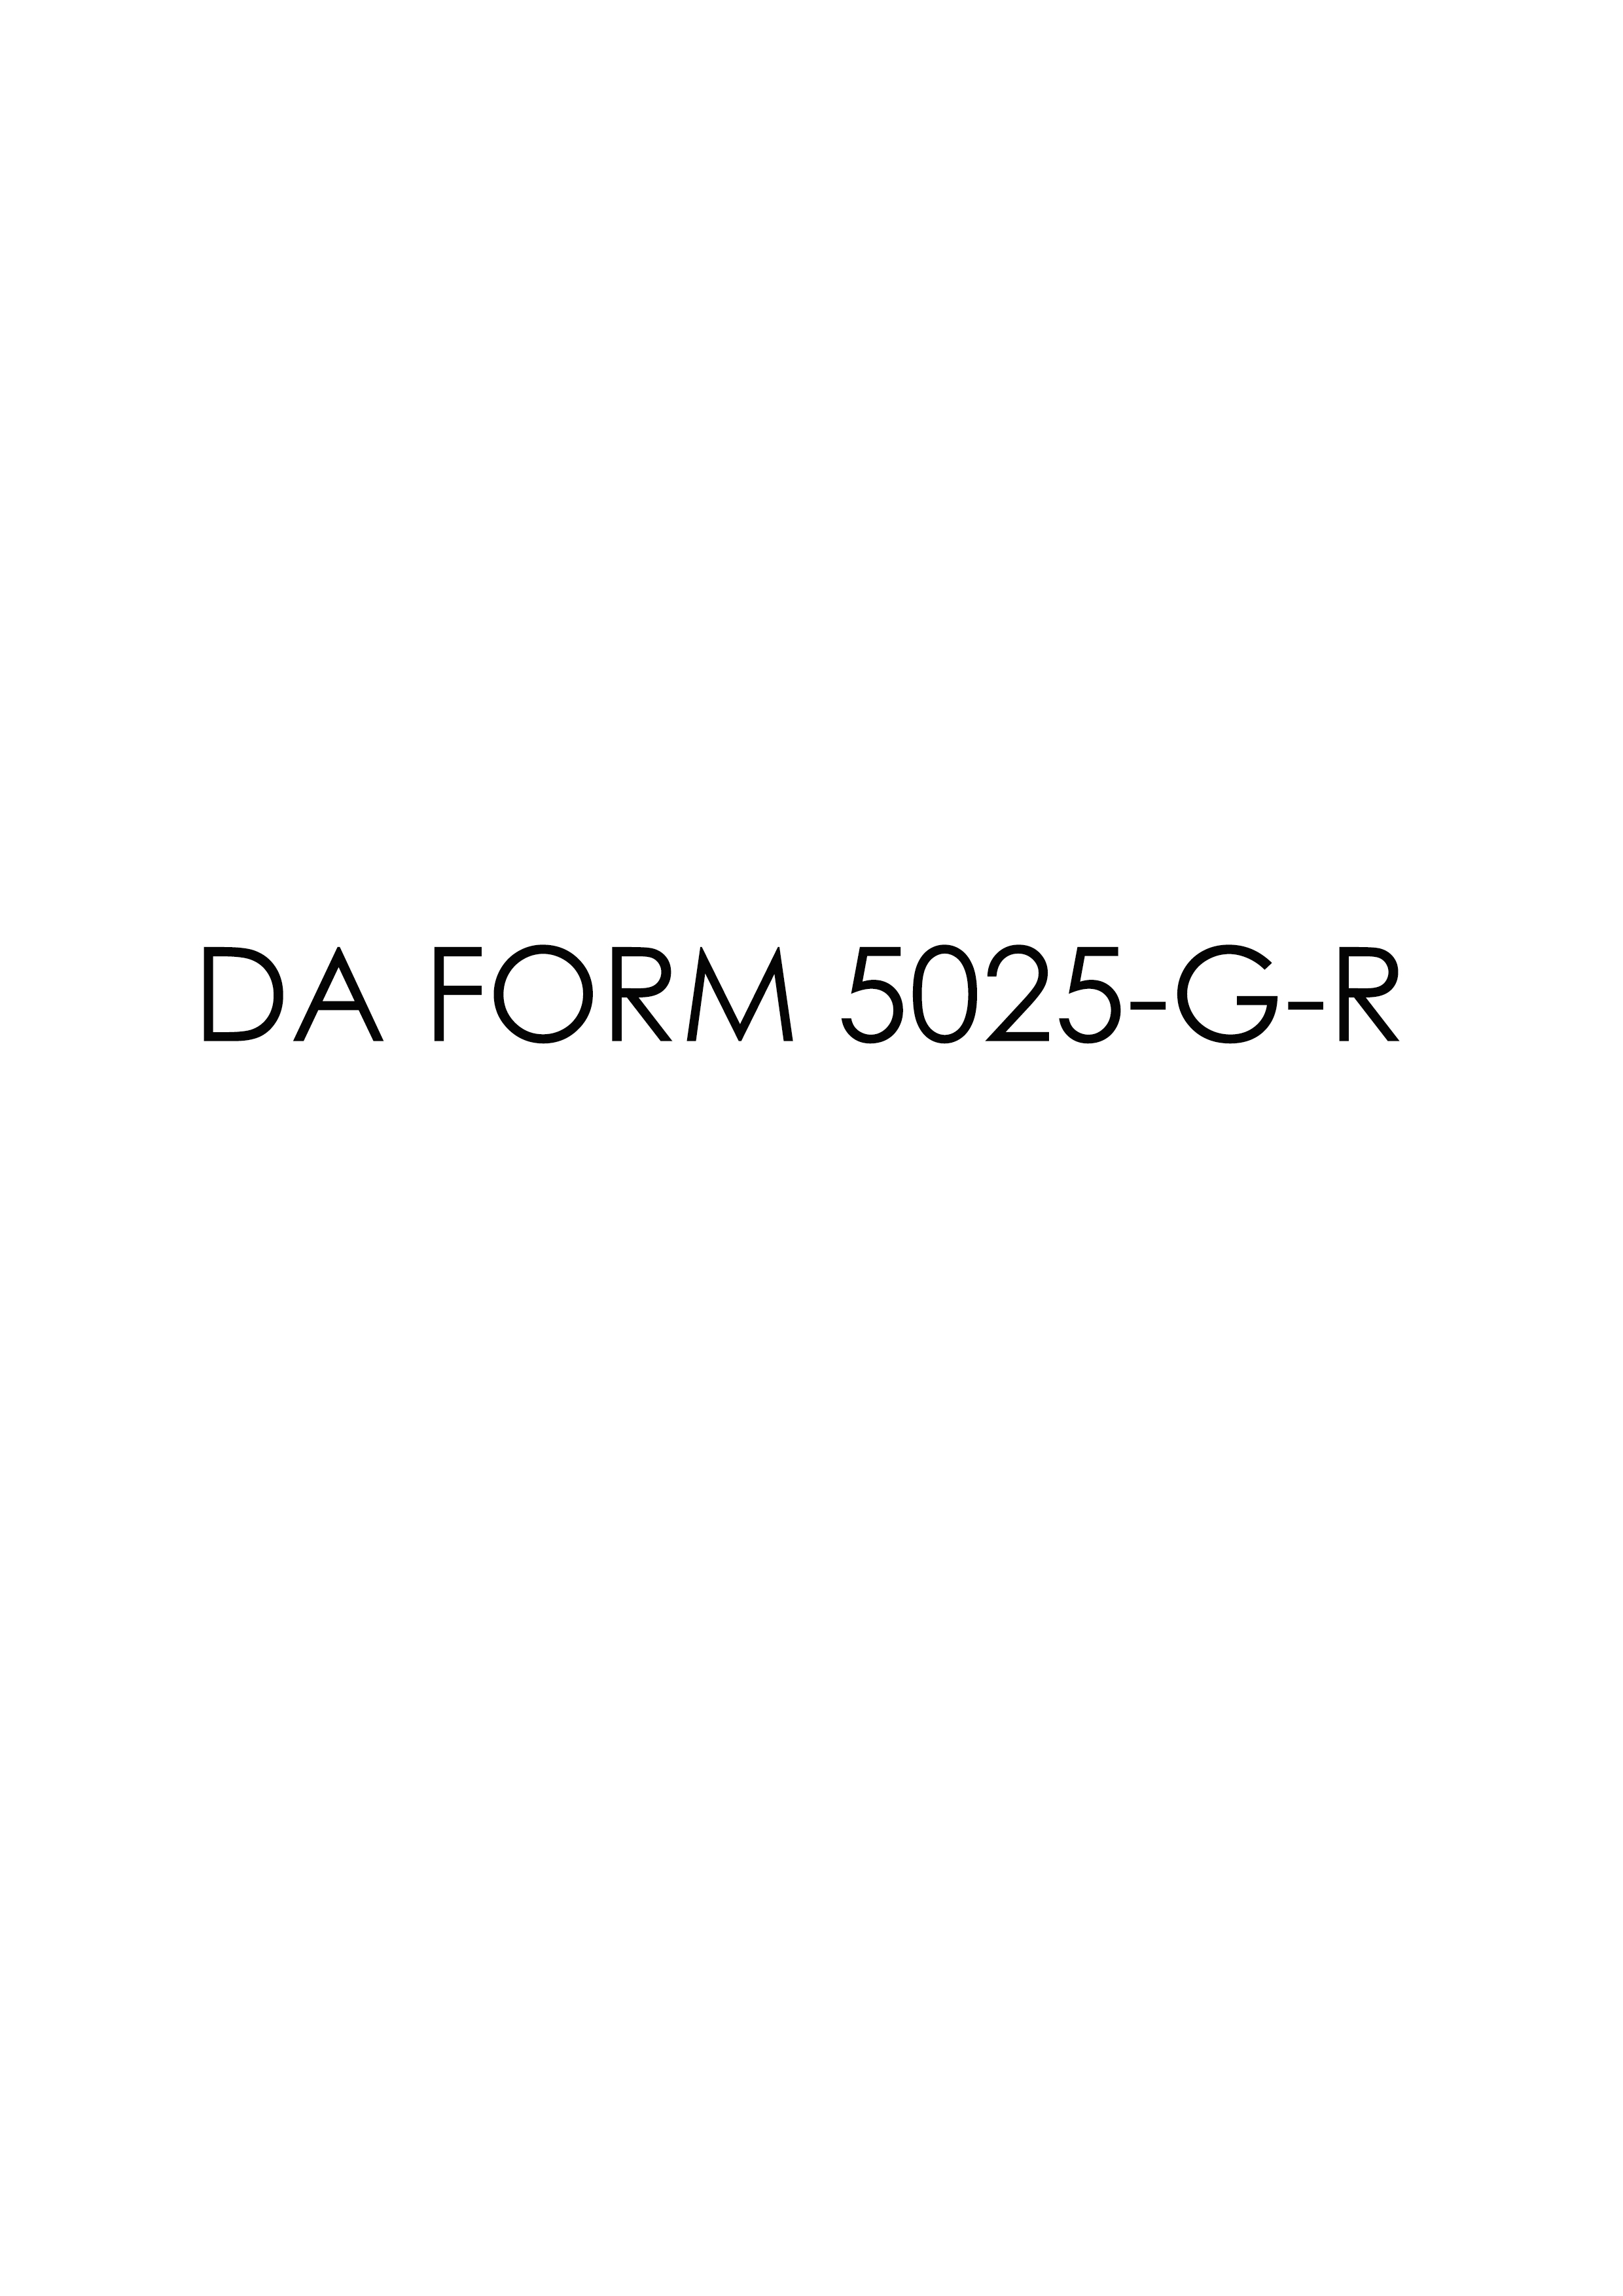 da Form 5025-G-R fillable